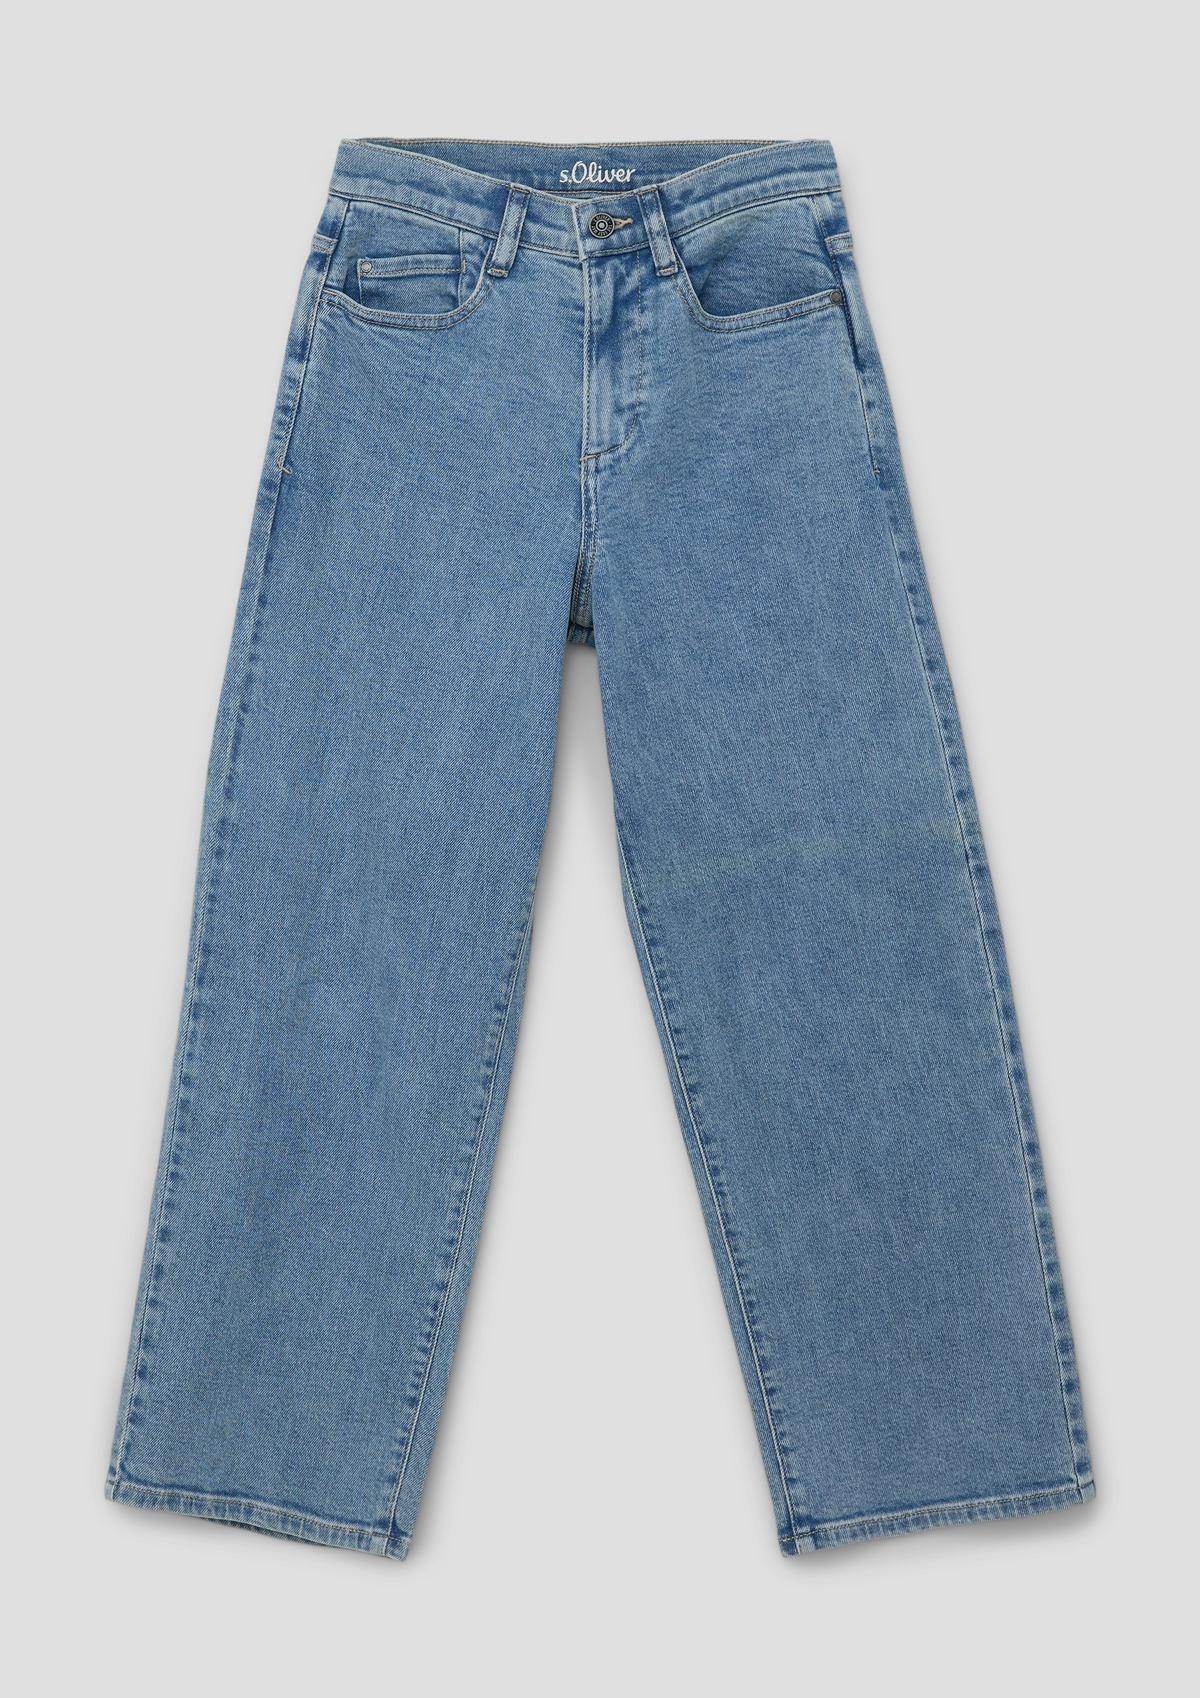 s.Oliver Jeans / Regular Fit / Mid Rise / Semi wide Leg